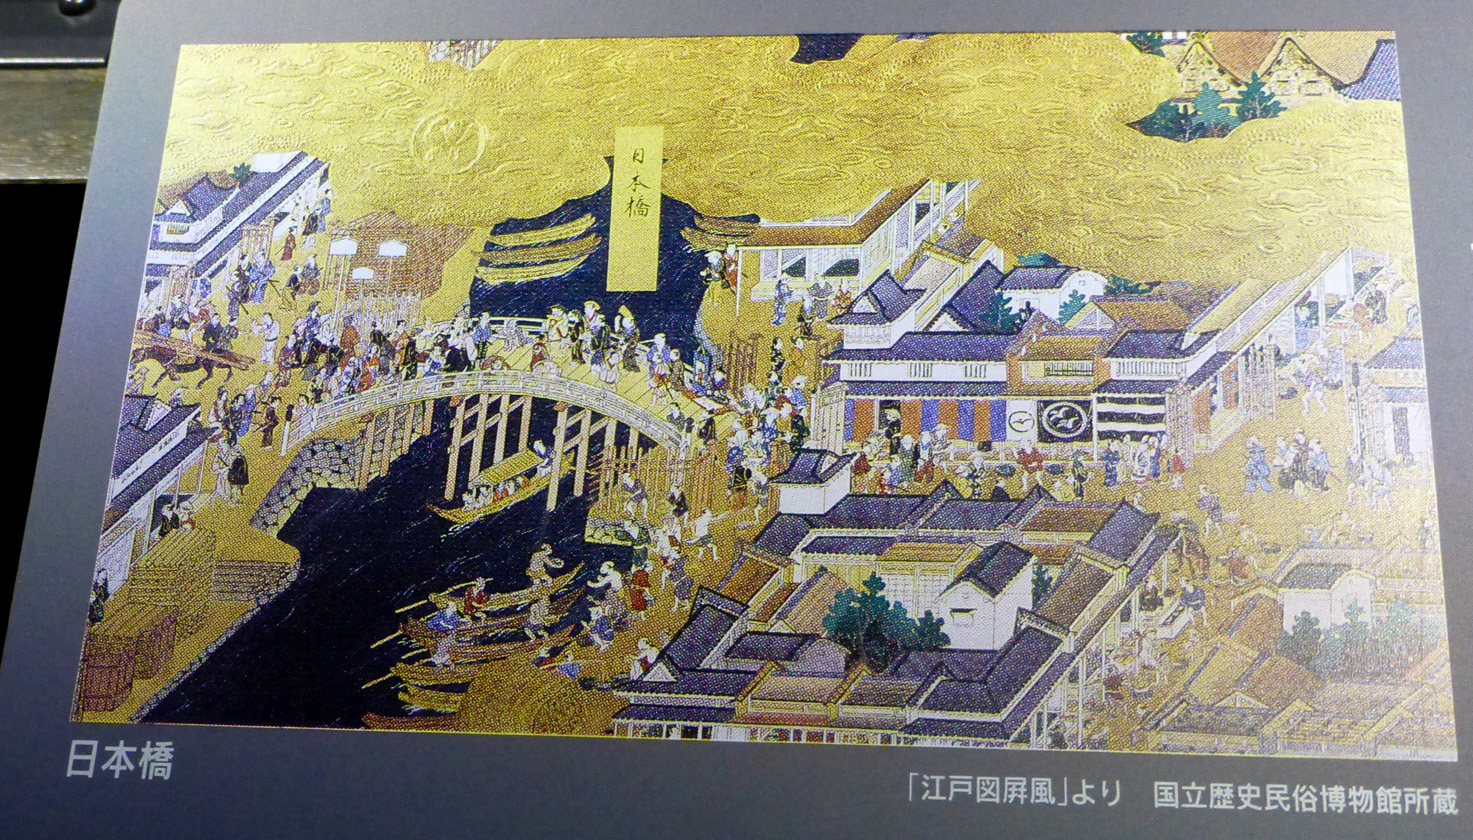 edo tokyo museum print of diorama P1010127.jpg